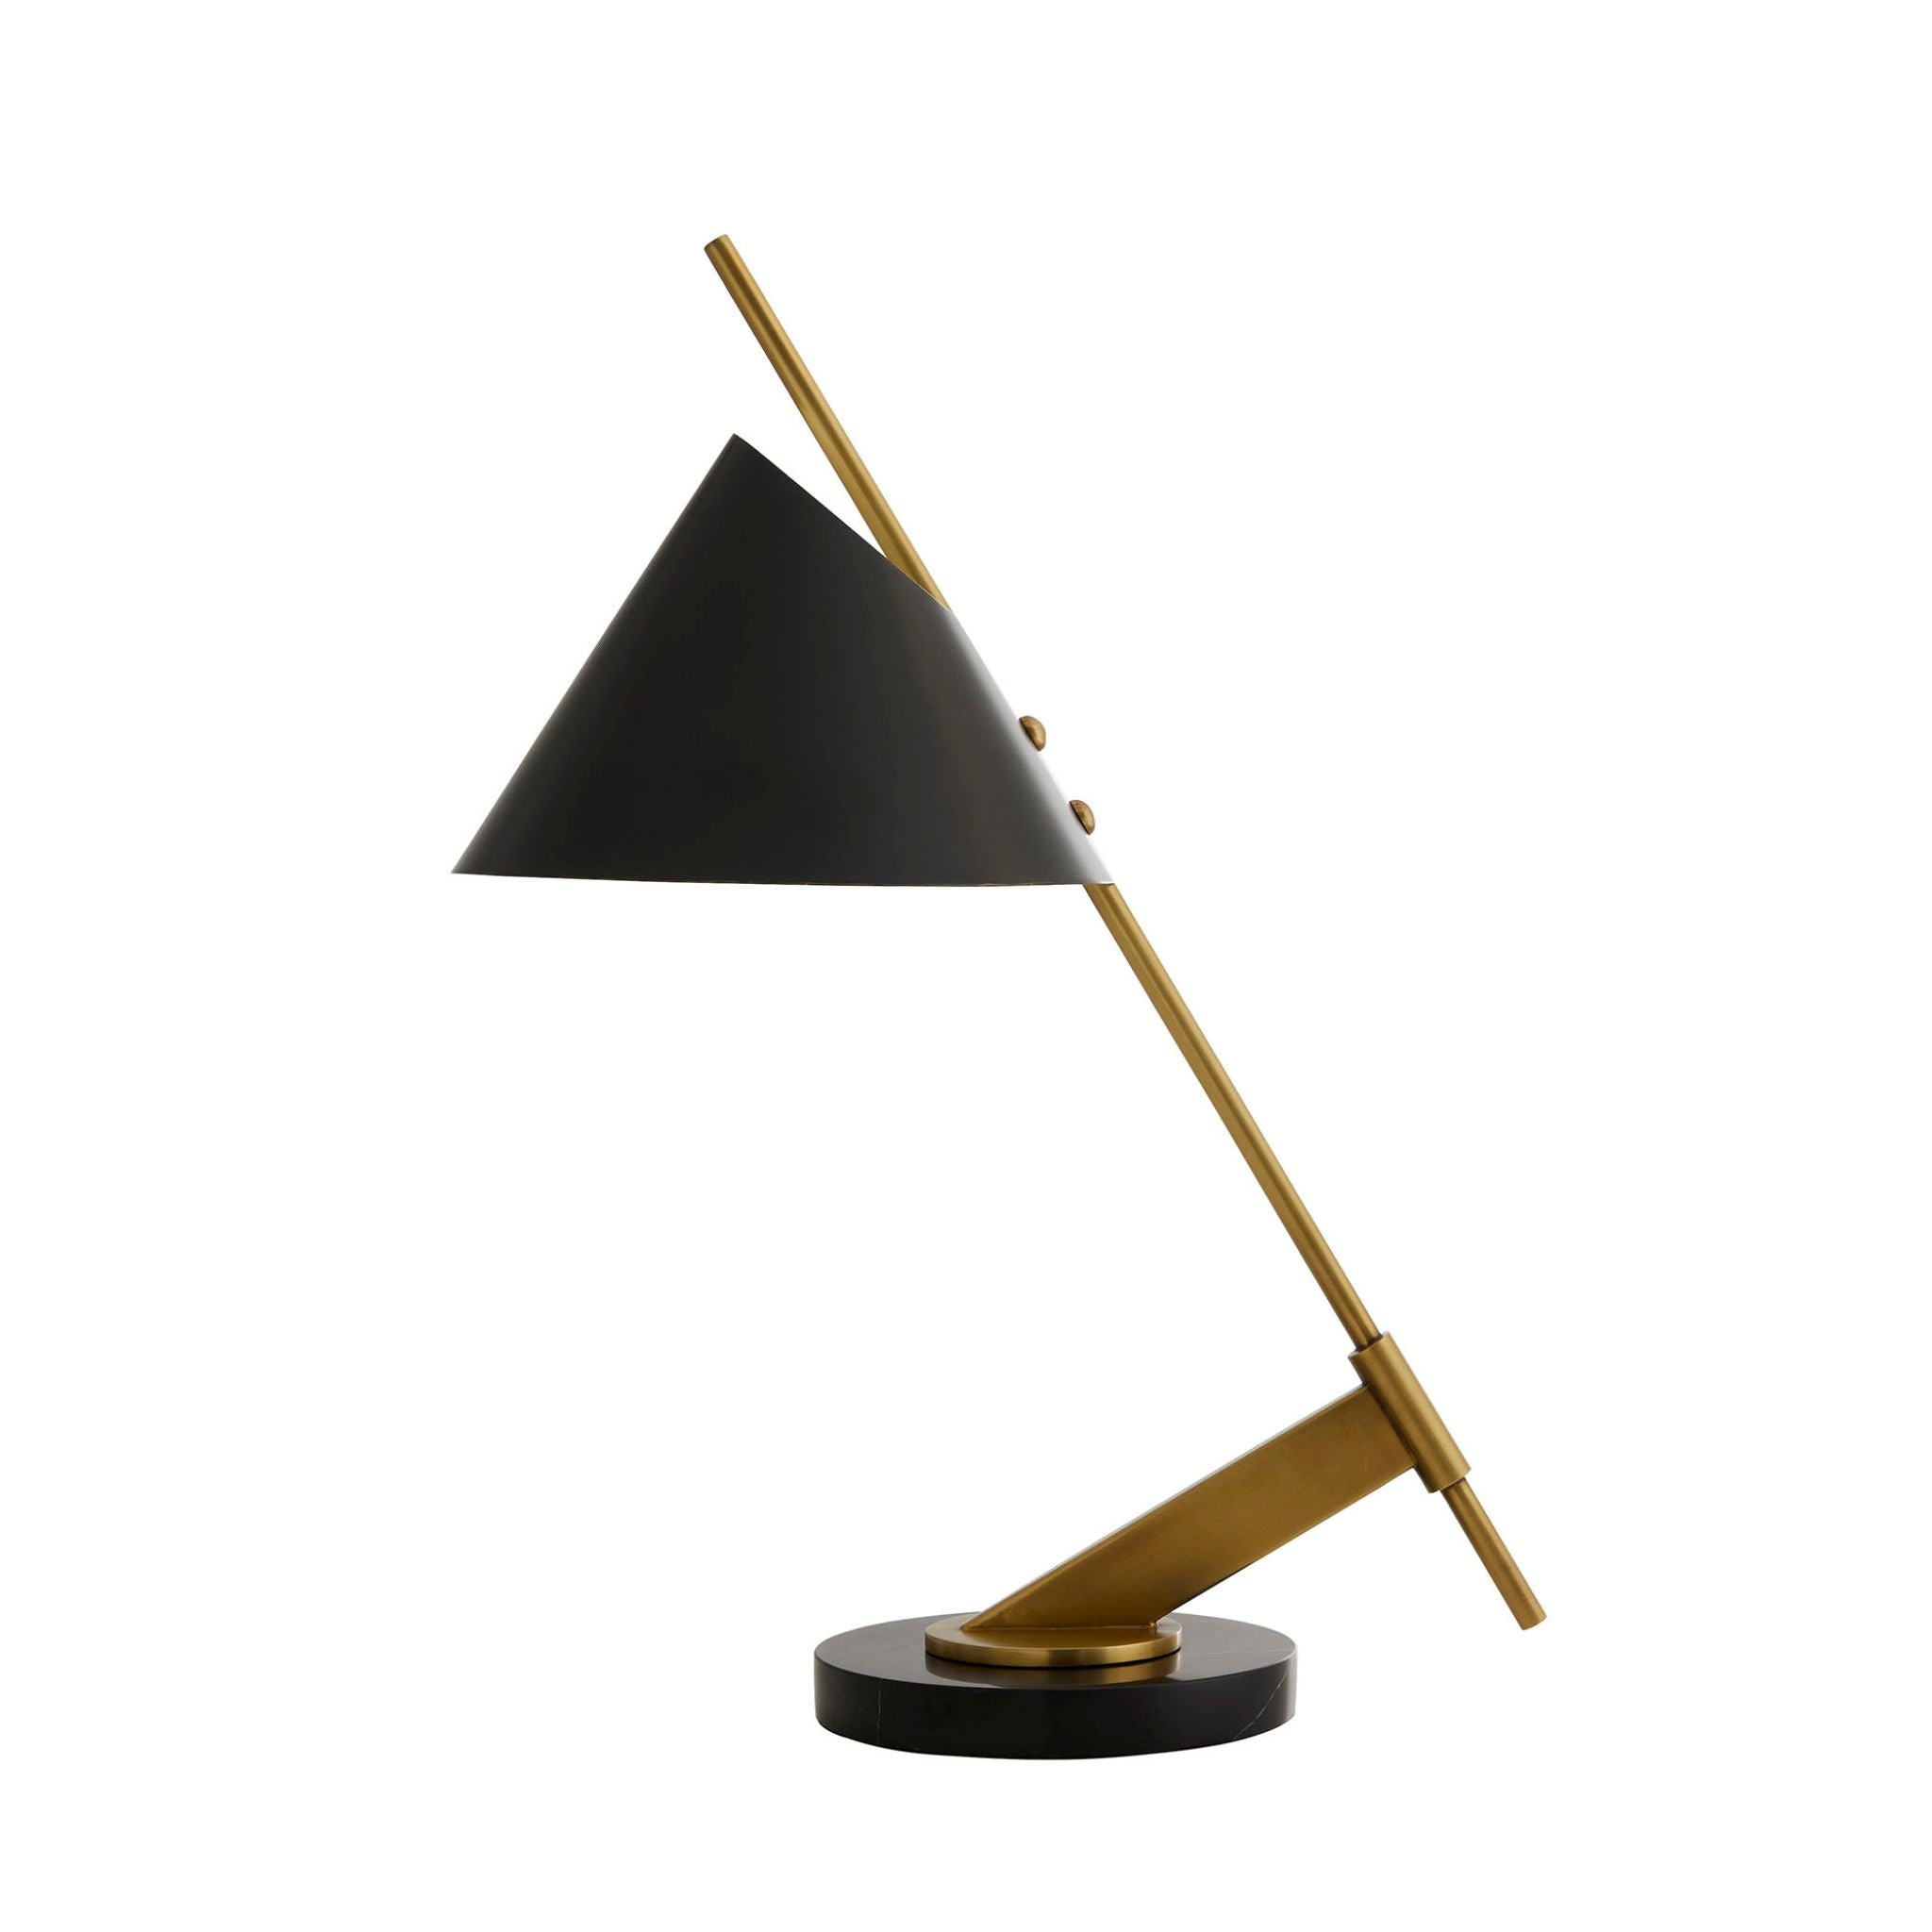 JENKINS LAMP - Simply Sam Home Furnishing SLC 